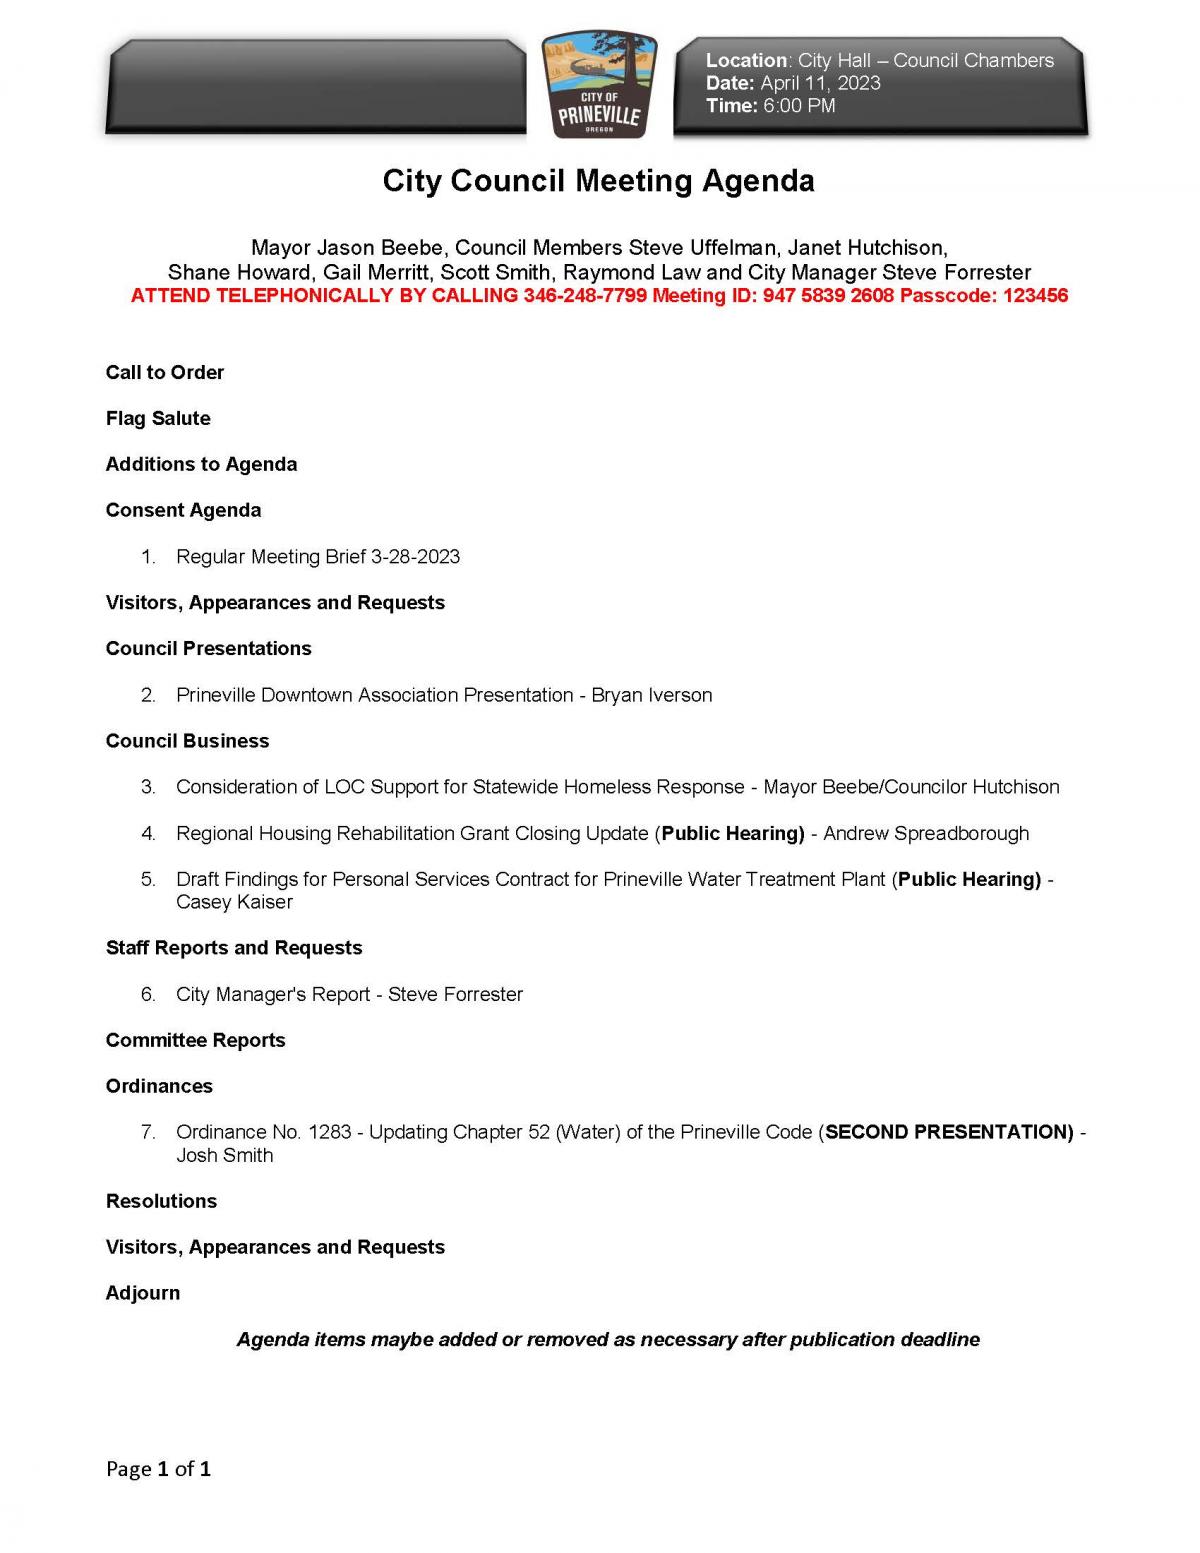 Council Agenda 4-11-2023